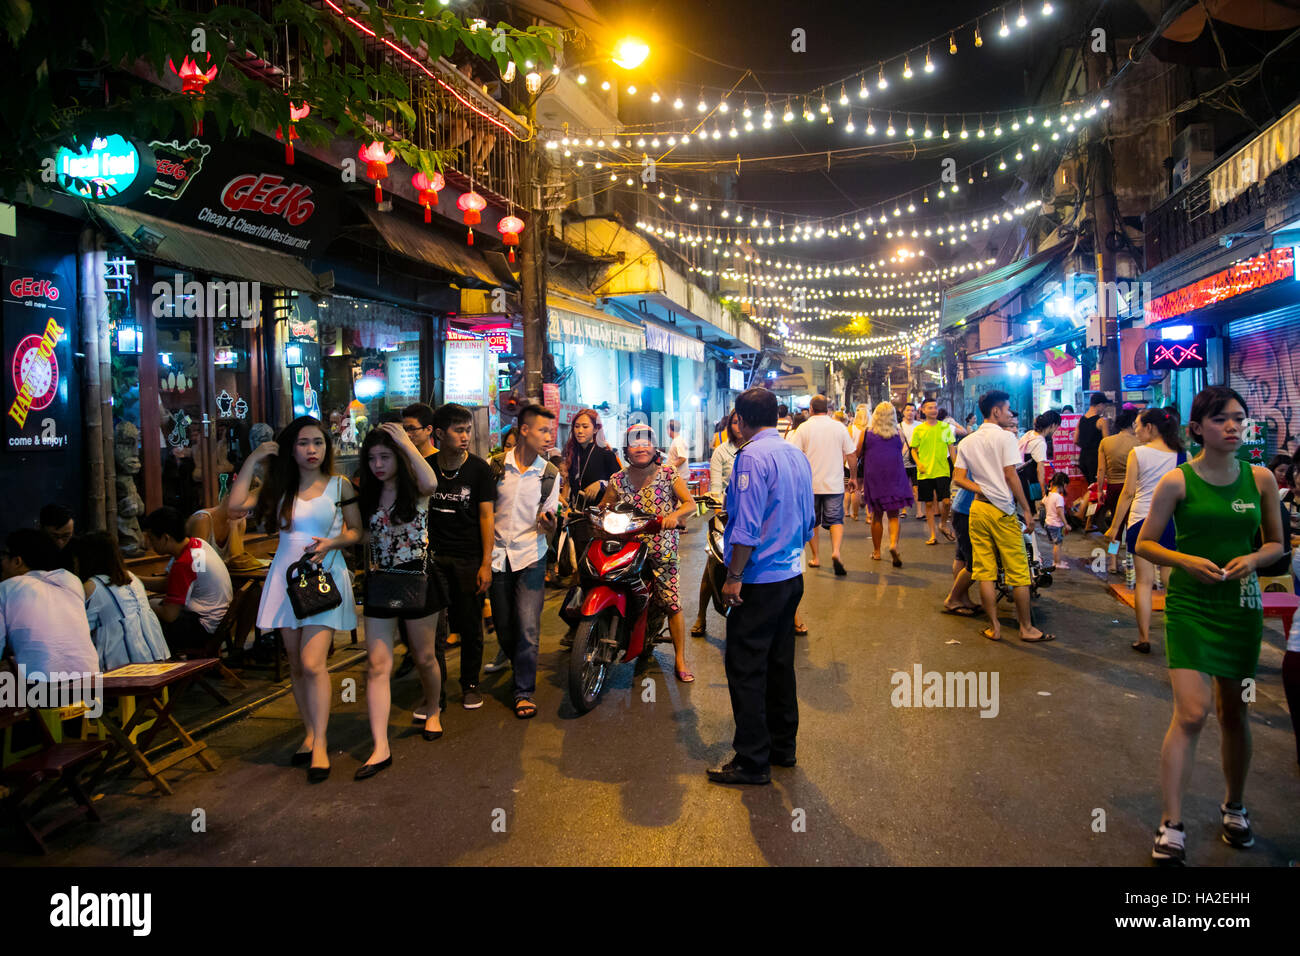 Tuyen Pho Di Bo, Walking Street, Old Quarter, Hanoi, Vietnam, Asie Banque D'Images